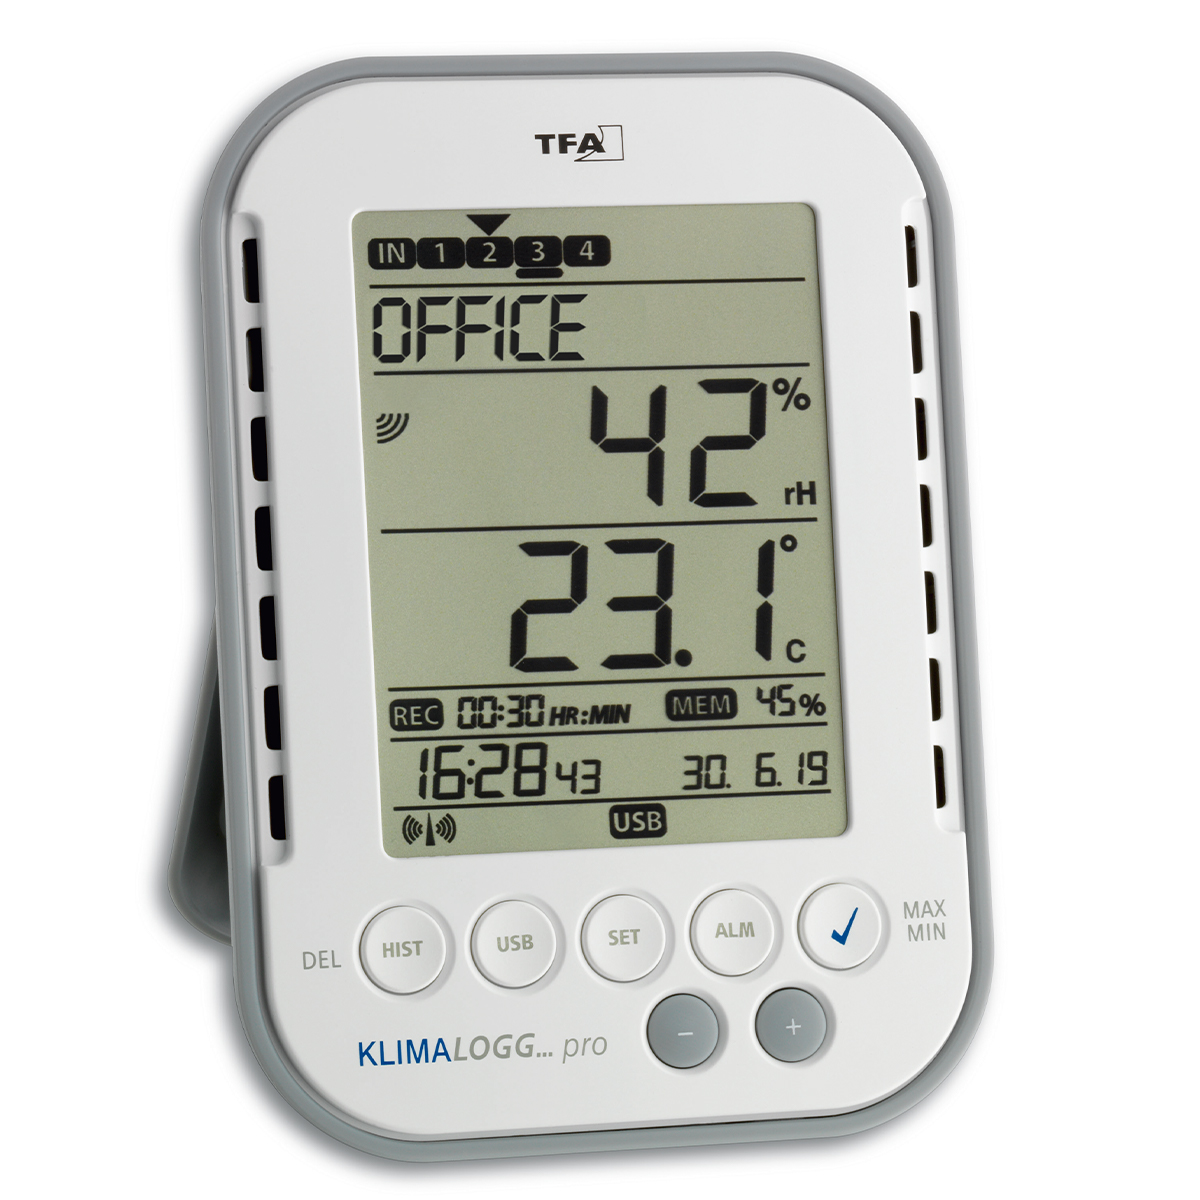 Nuolin High And Low Thermometer Storage Home Temperature Monitor Tool 1pcs  -40-50 Maximum Minimum Greenhouse Hygrometer